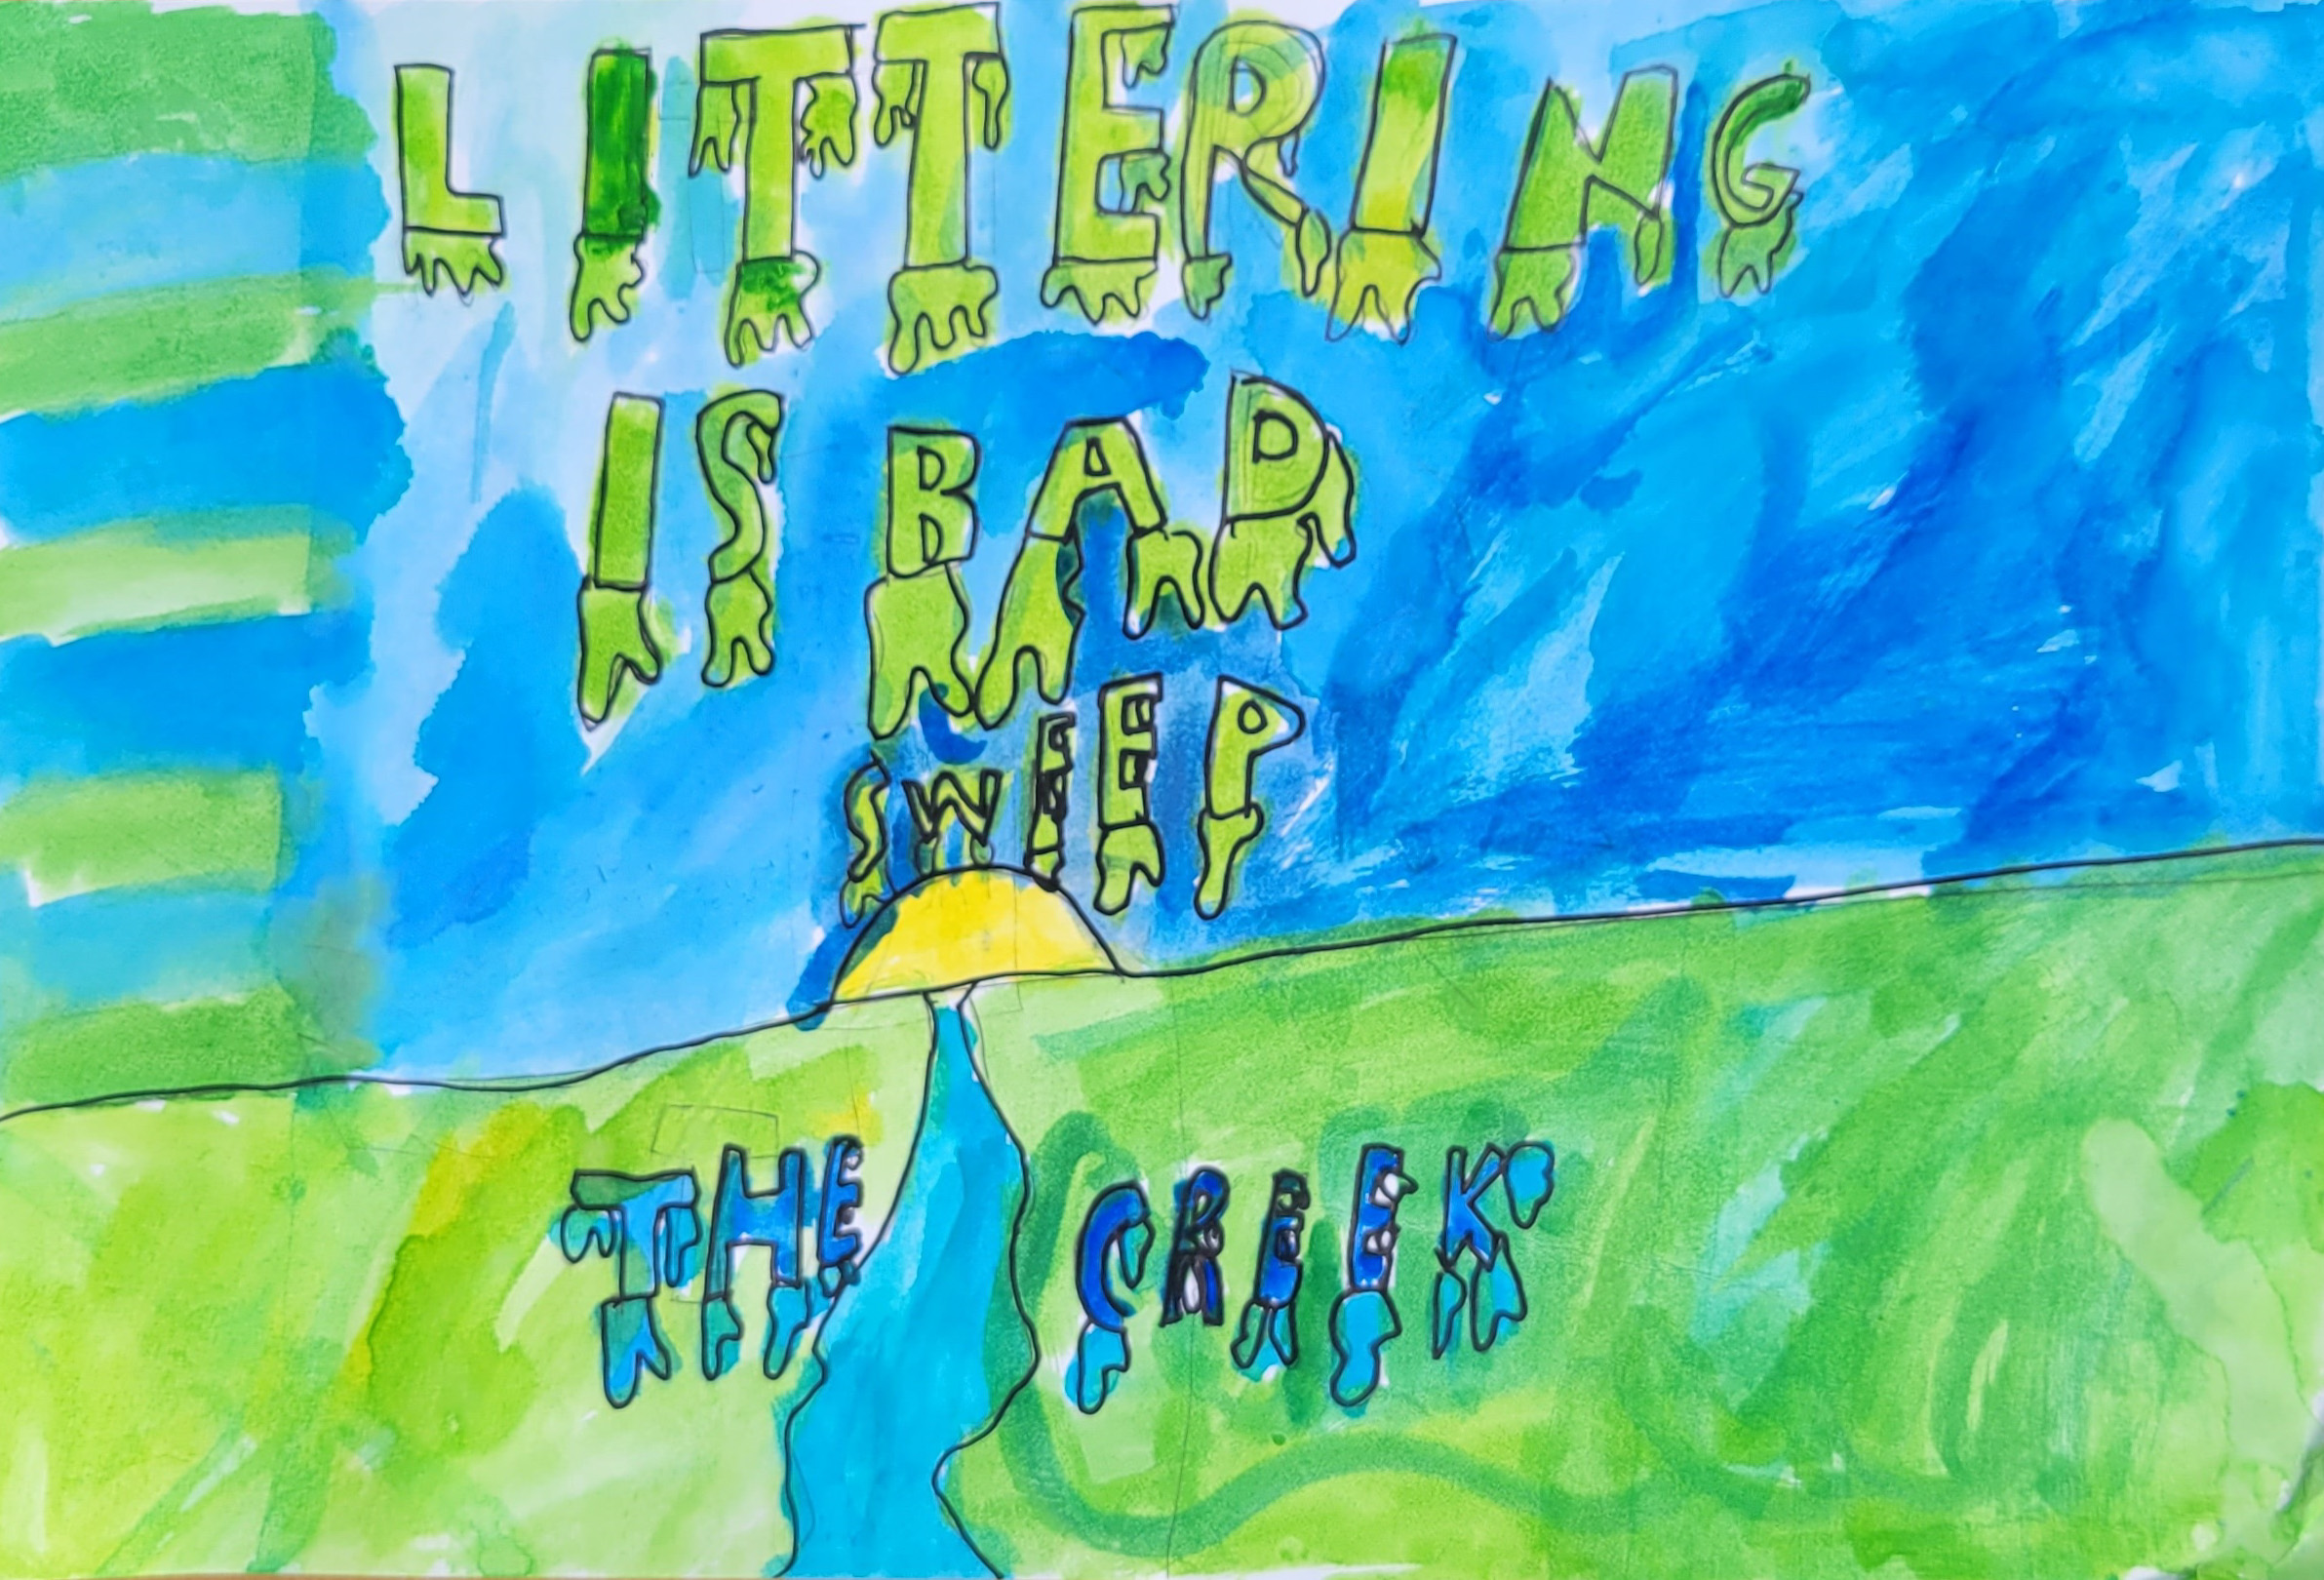 Littering Is Bad - Sweep the Creek by Yhkr